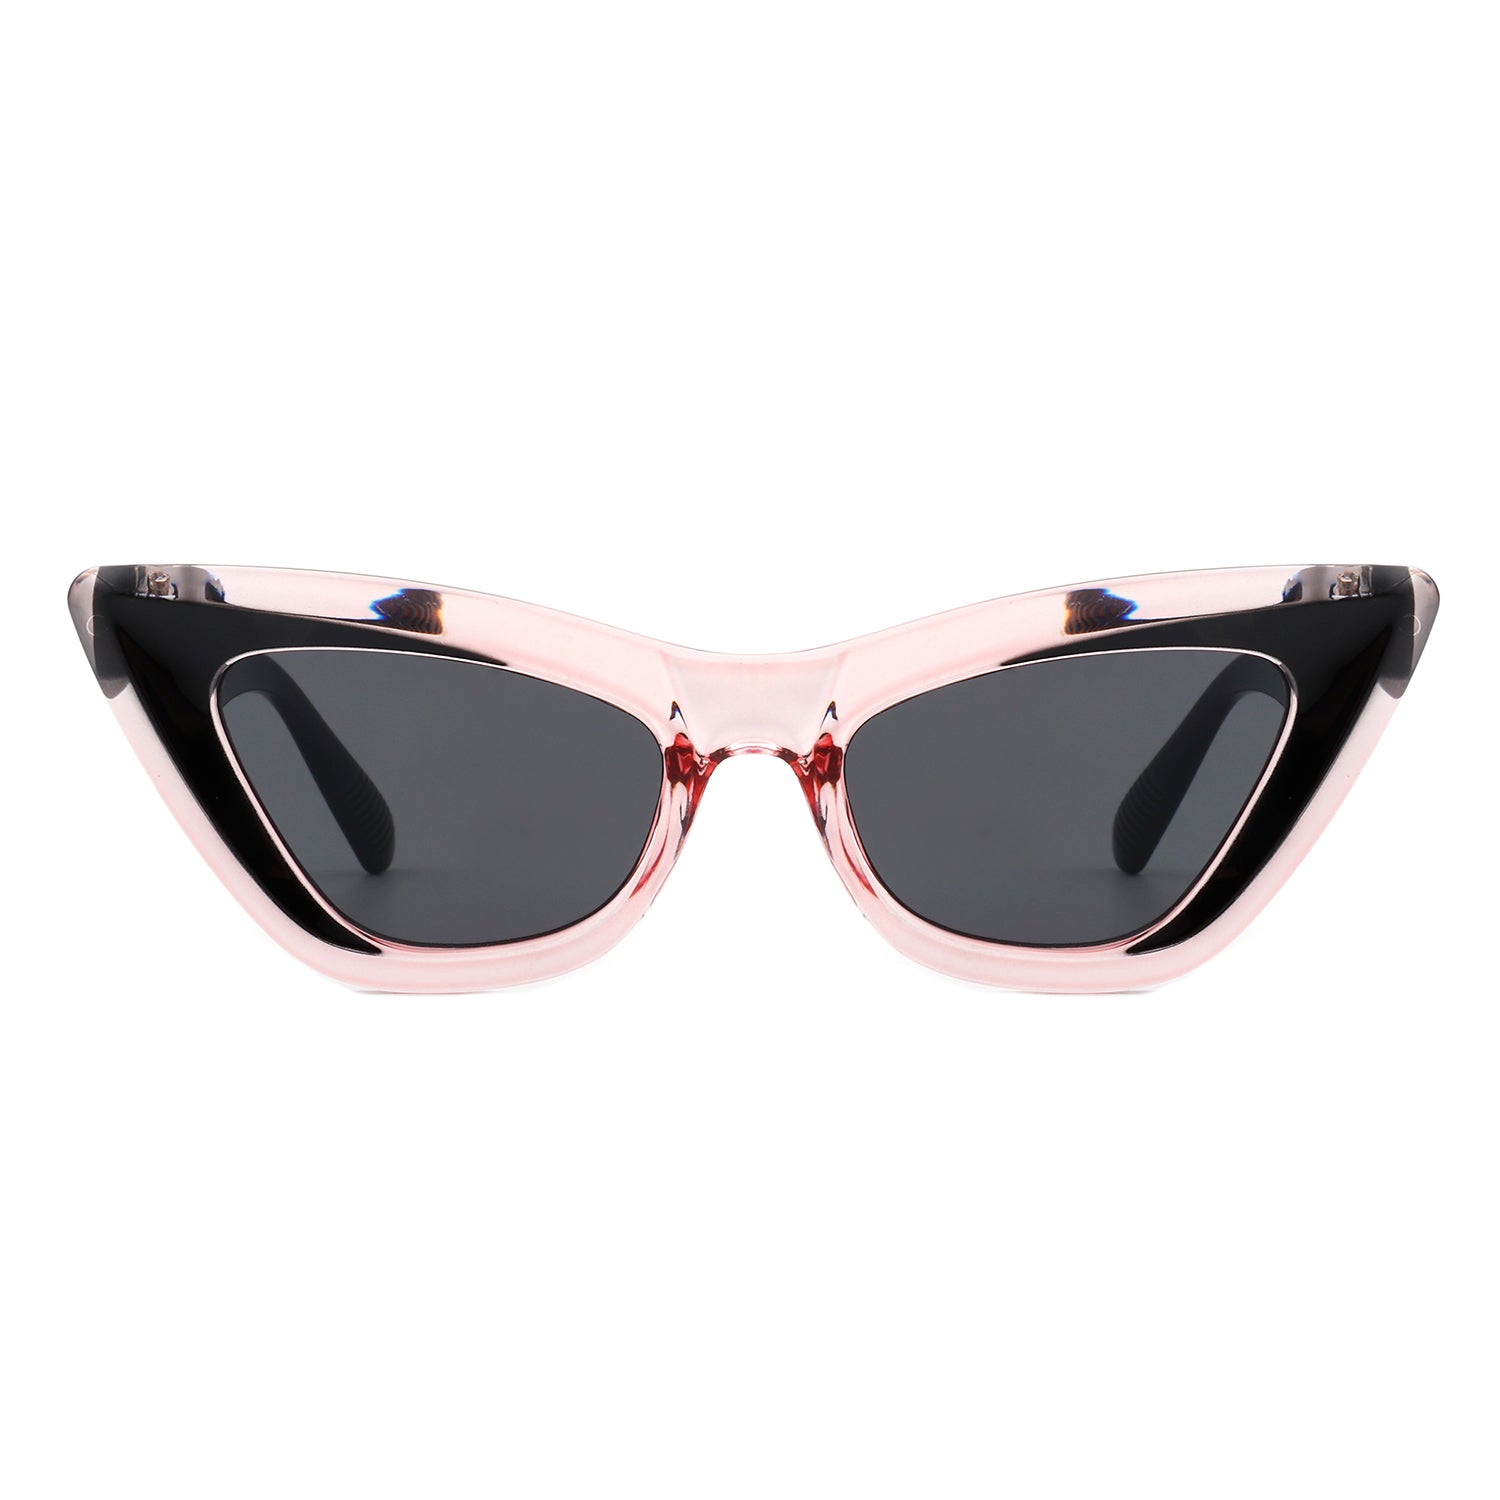 S2108 - Retro High Pointed Women Fashion Cat Eye Sunglasses - Iris